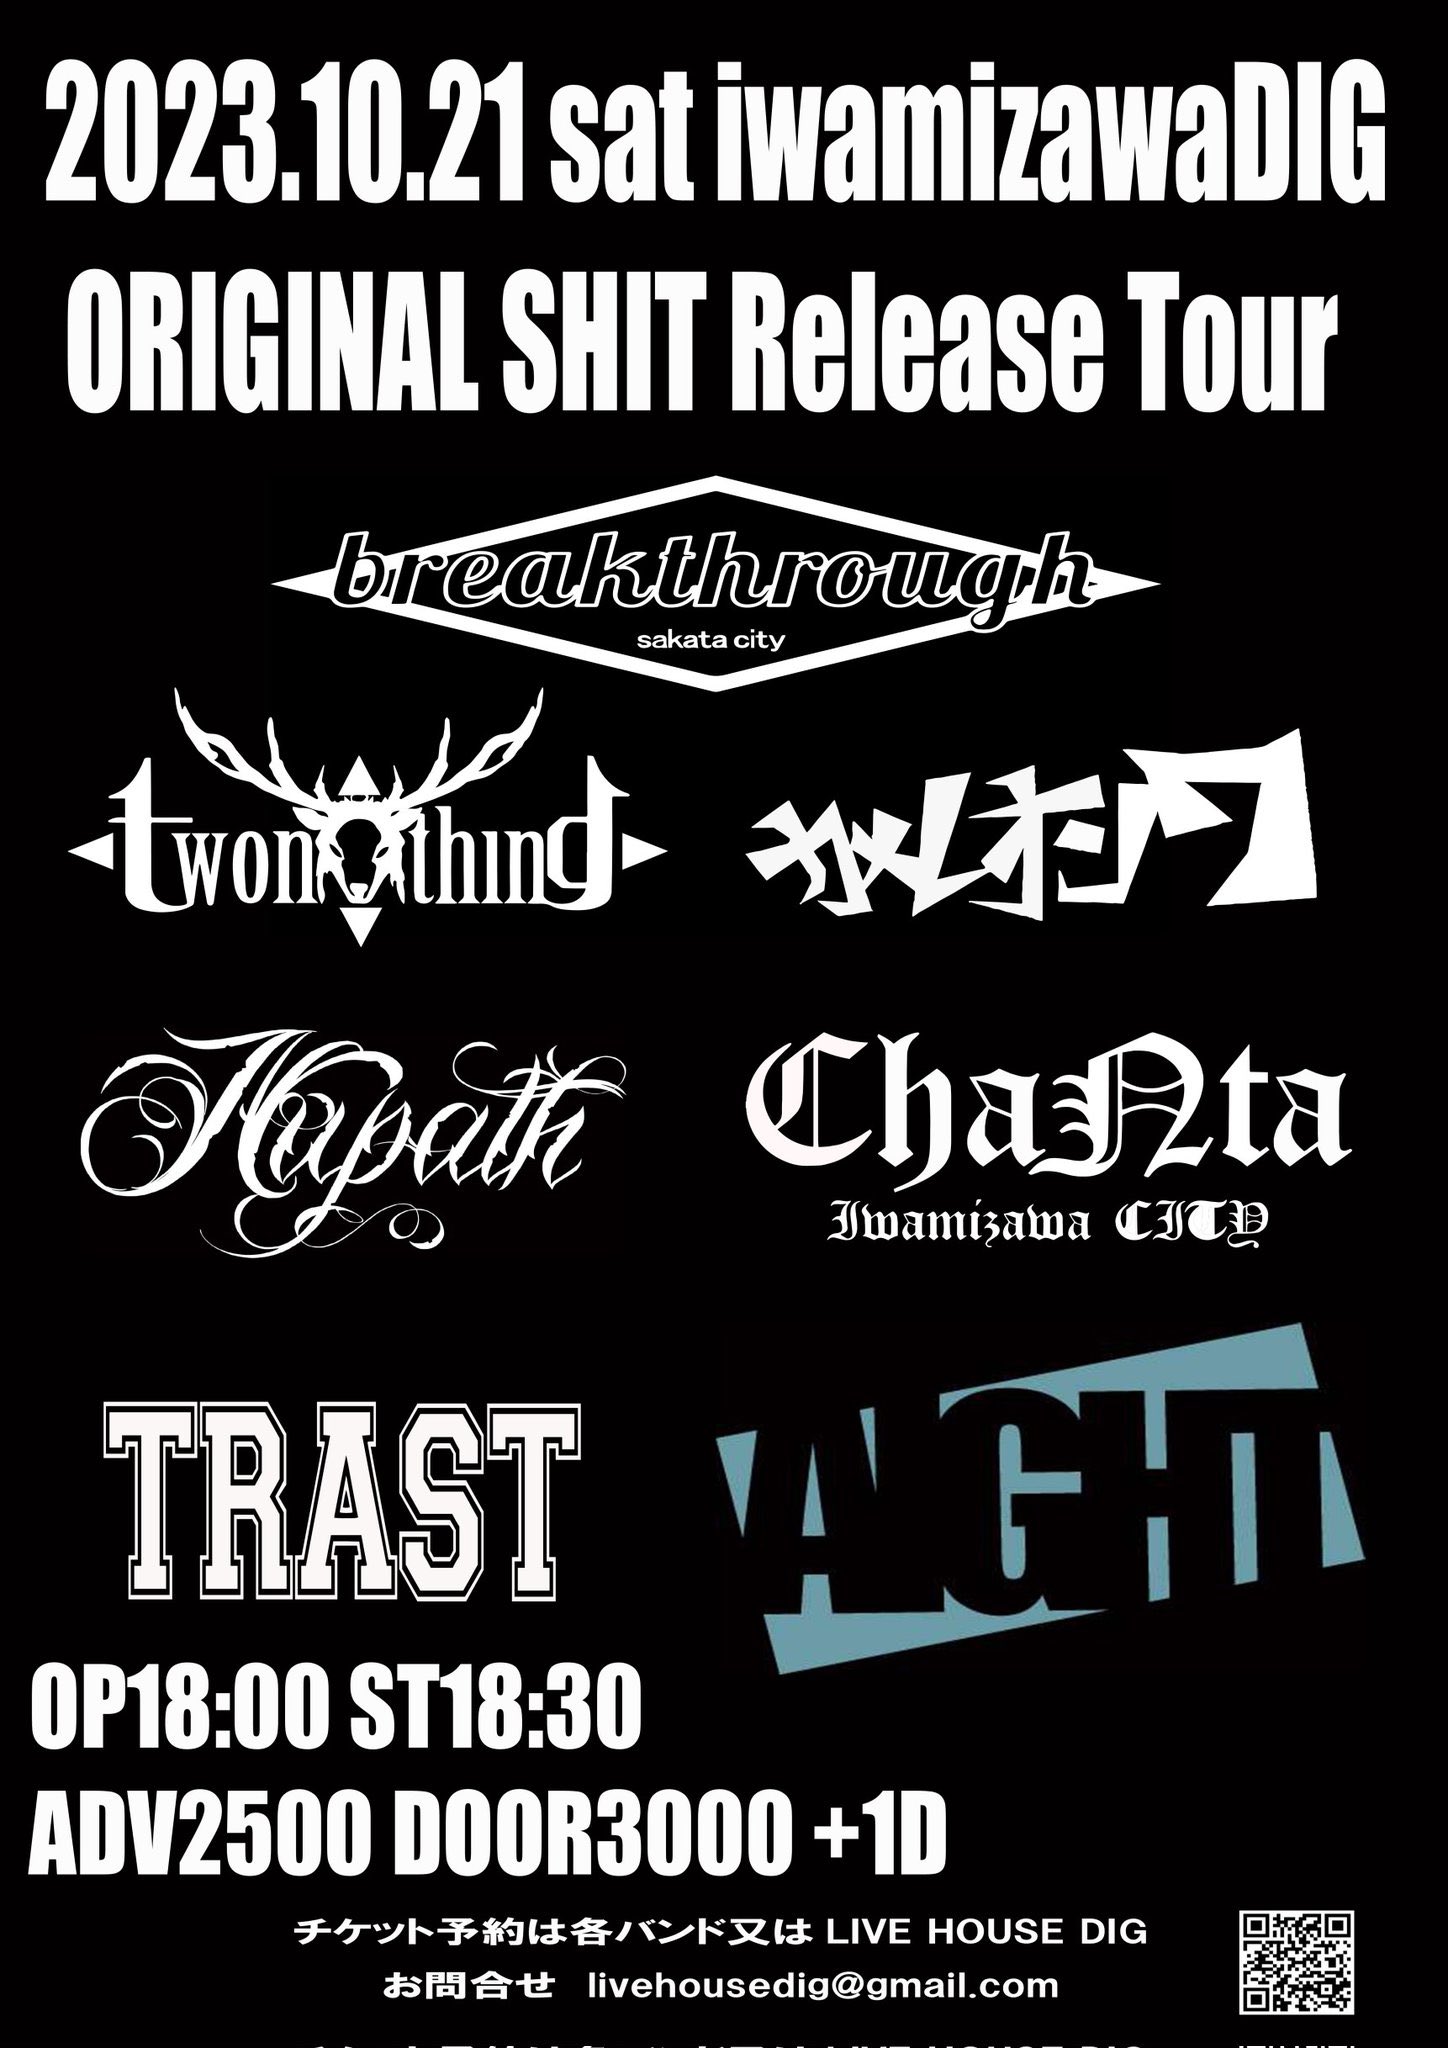 “ORIGINAL SHIT” Release Tour